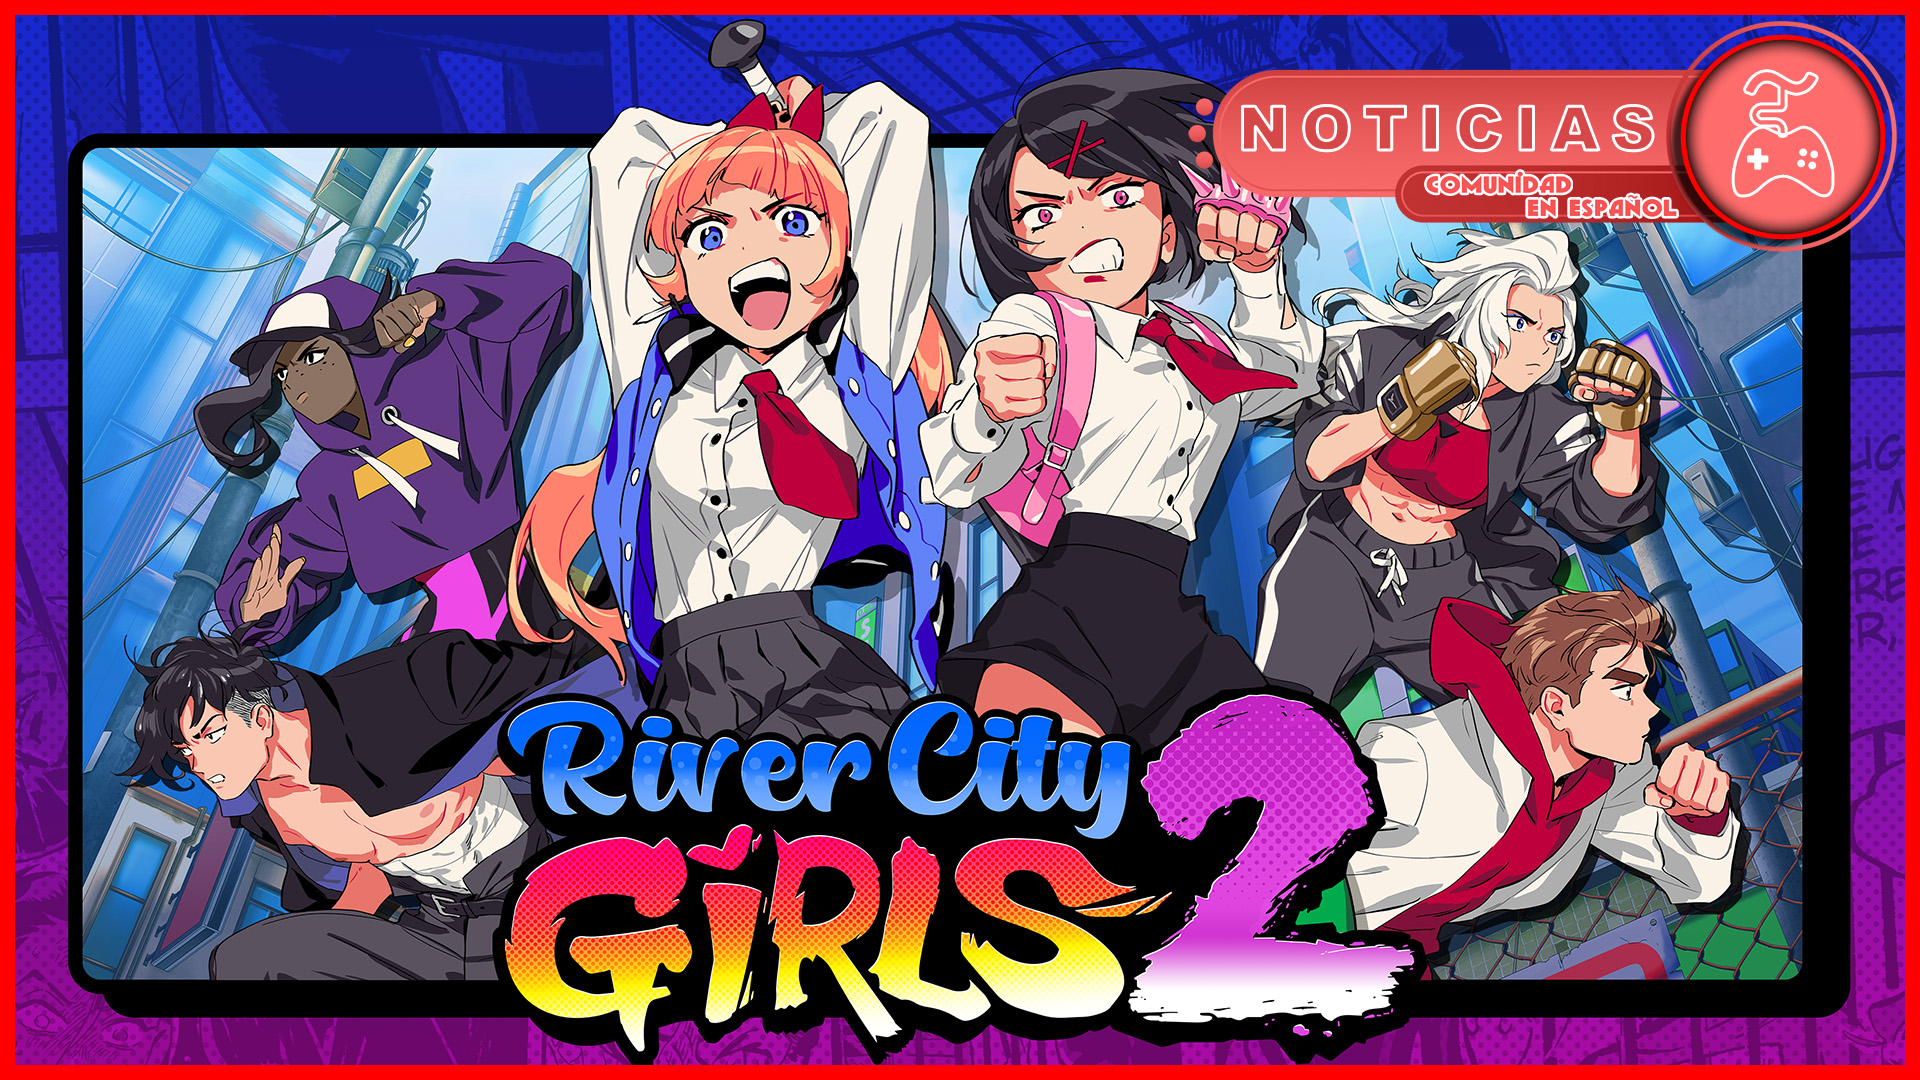 River City Girls 2 - Noticia